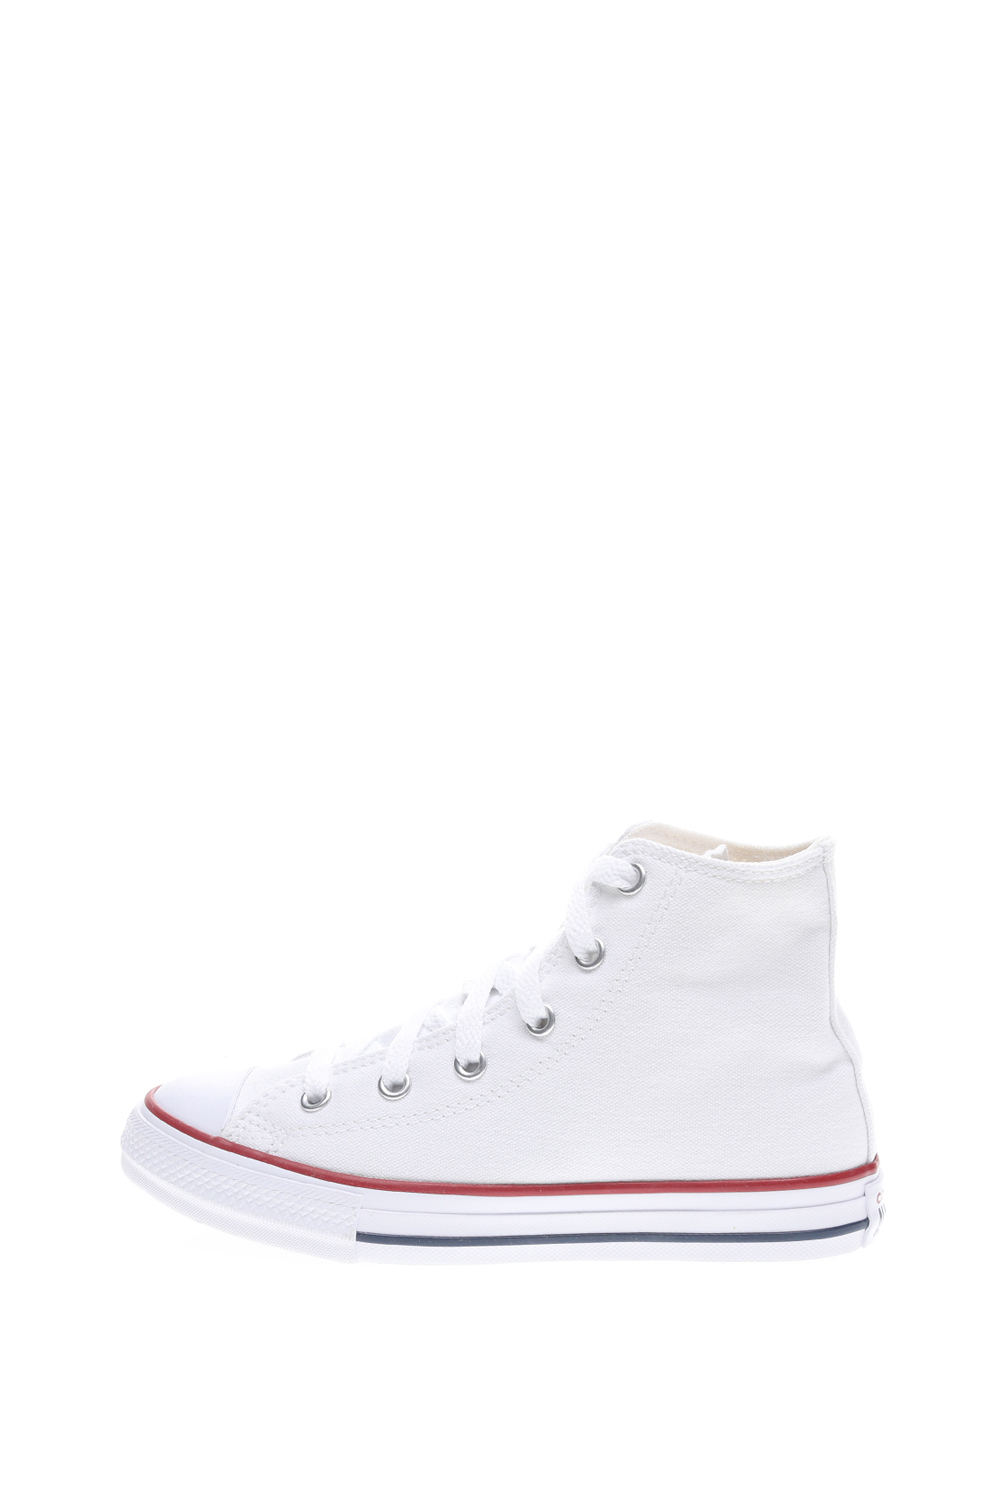 CONVERSE - Παιδικά παπούτσια Chuck Taylor All Star II Hi λευκά Παιδικά/Girls/Παπούτσια/Sneakers